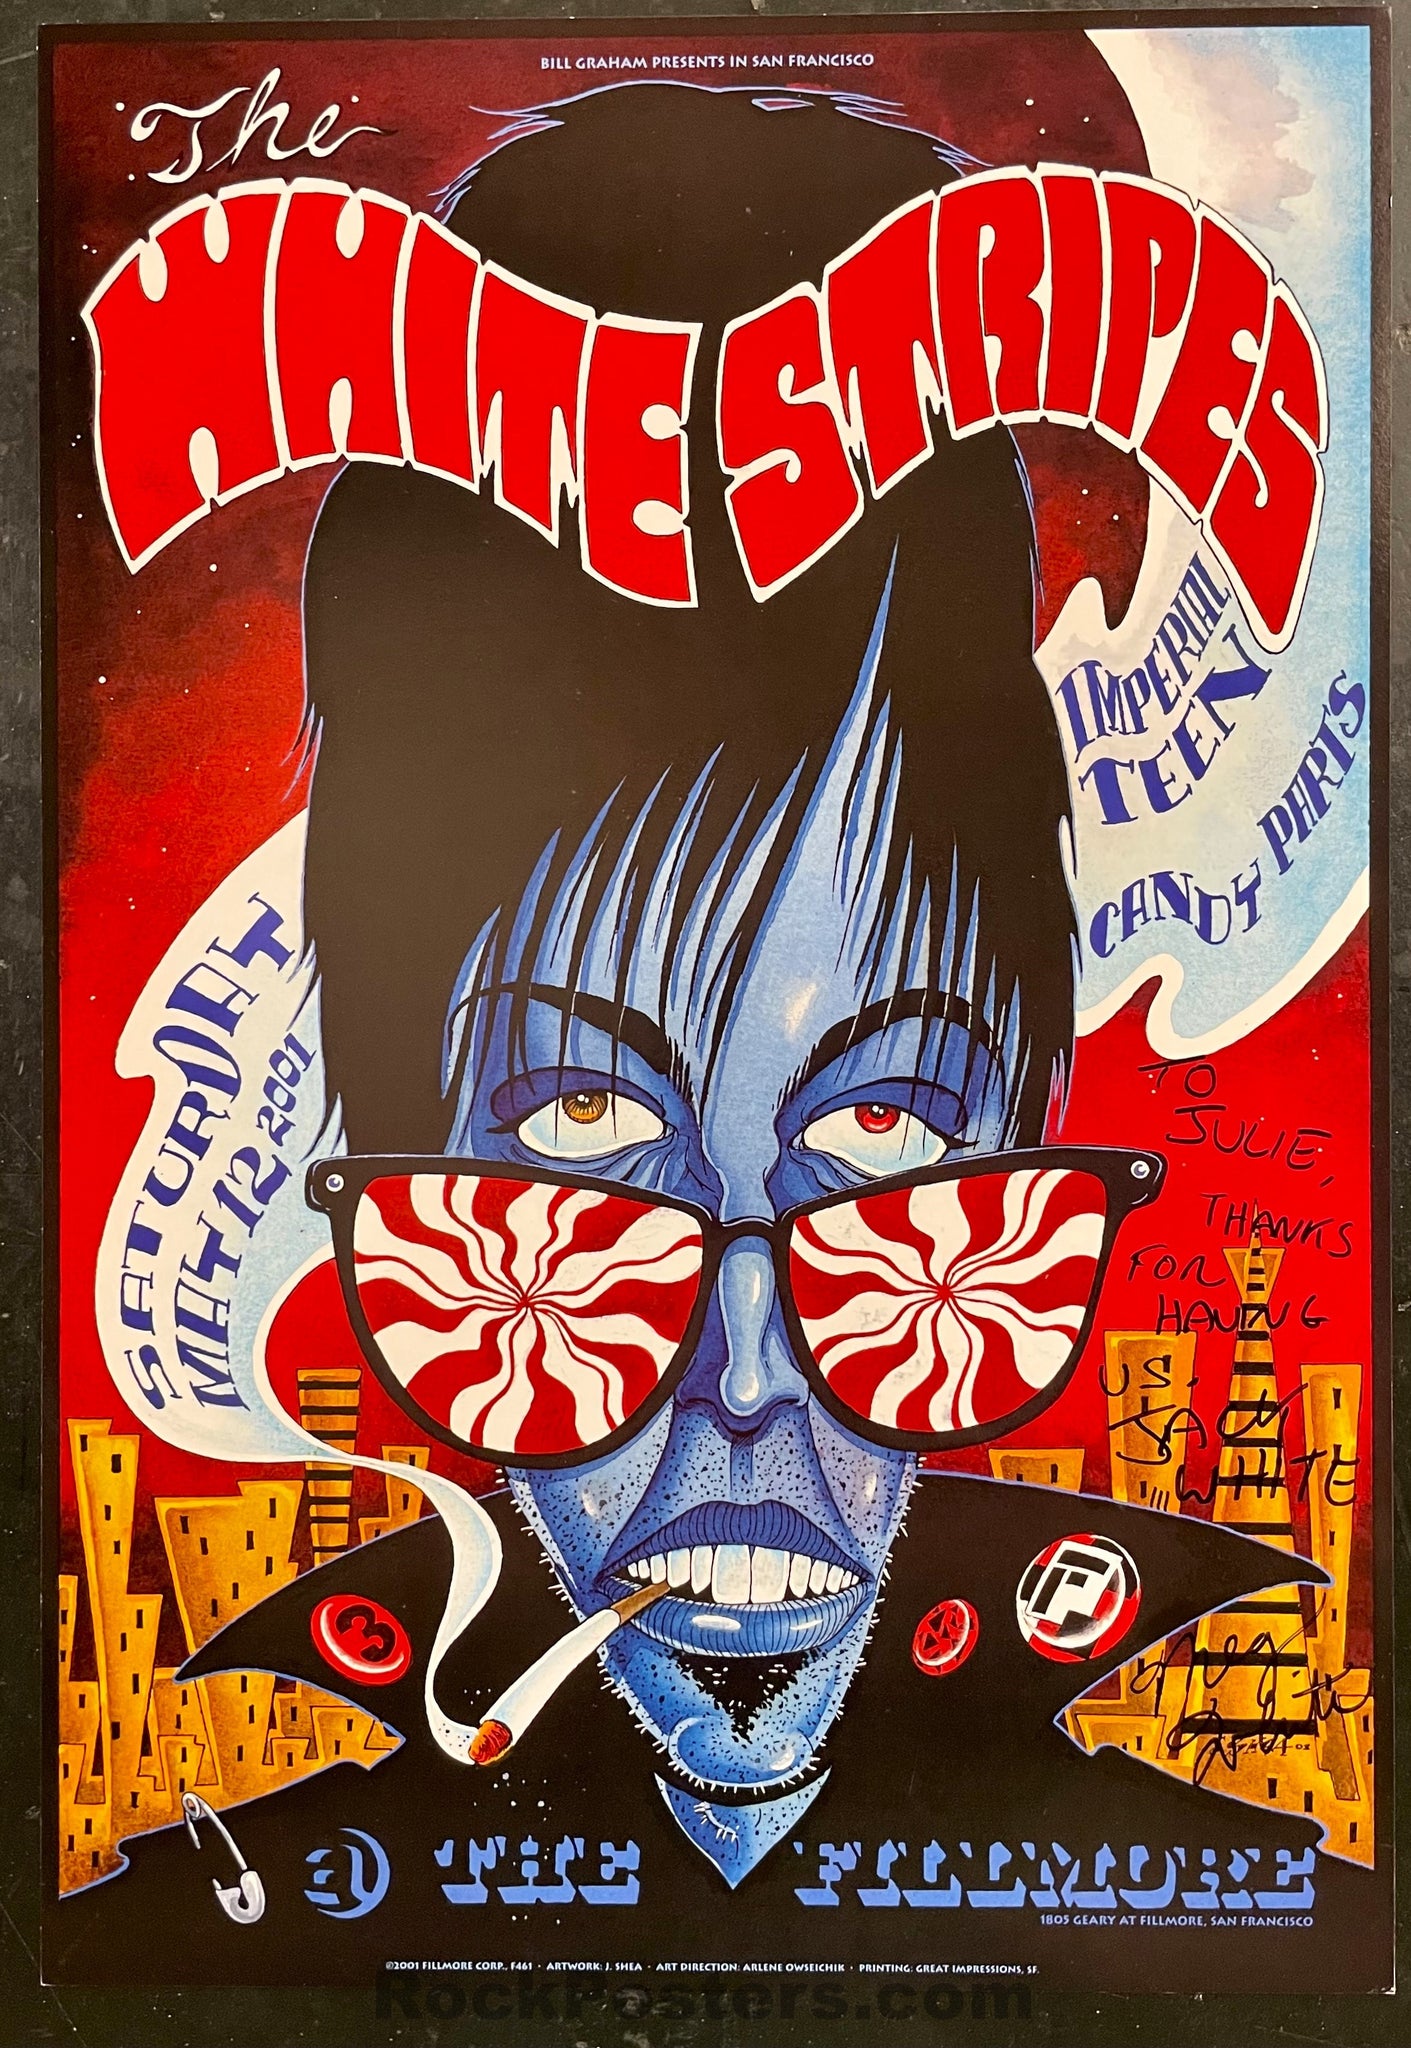 AUCTION - NF-461 - White Stripes - Meg & Jack White SIGNED - 2001 Poster - The Fillmore - Near Mint